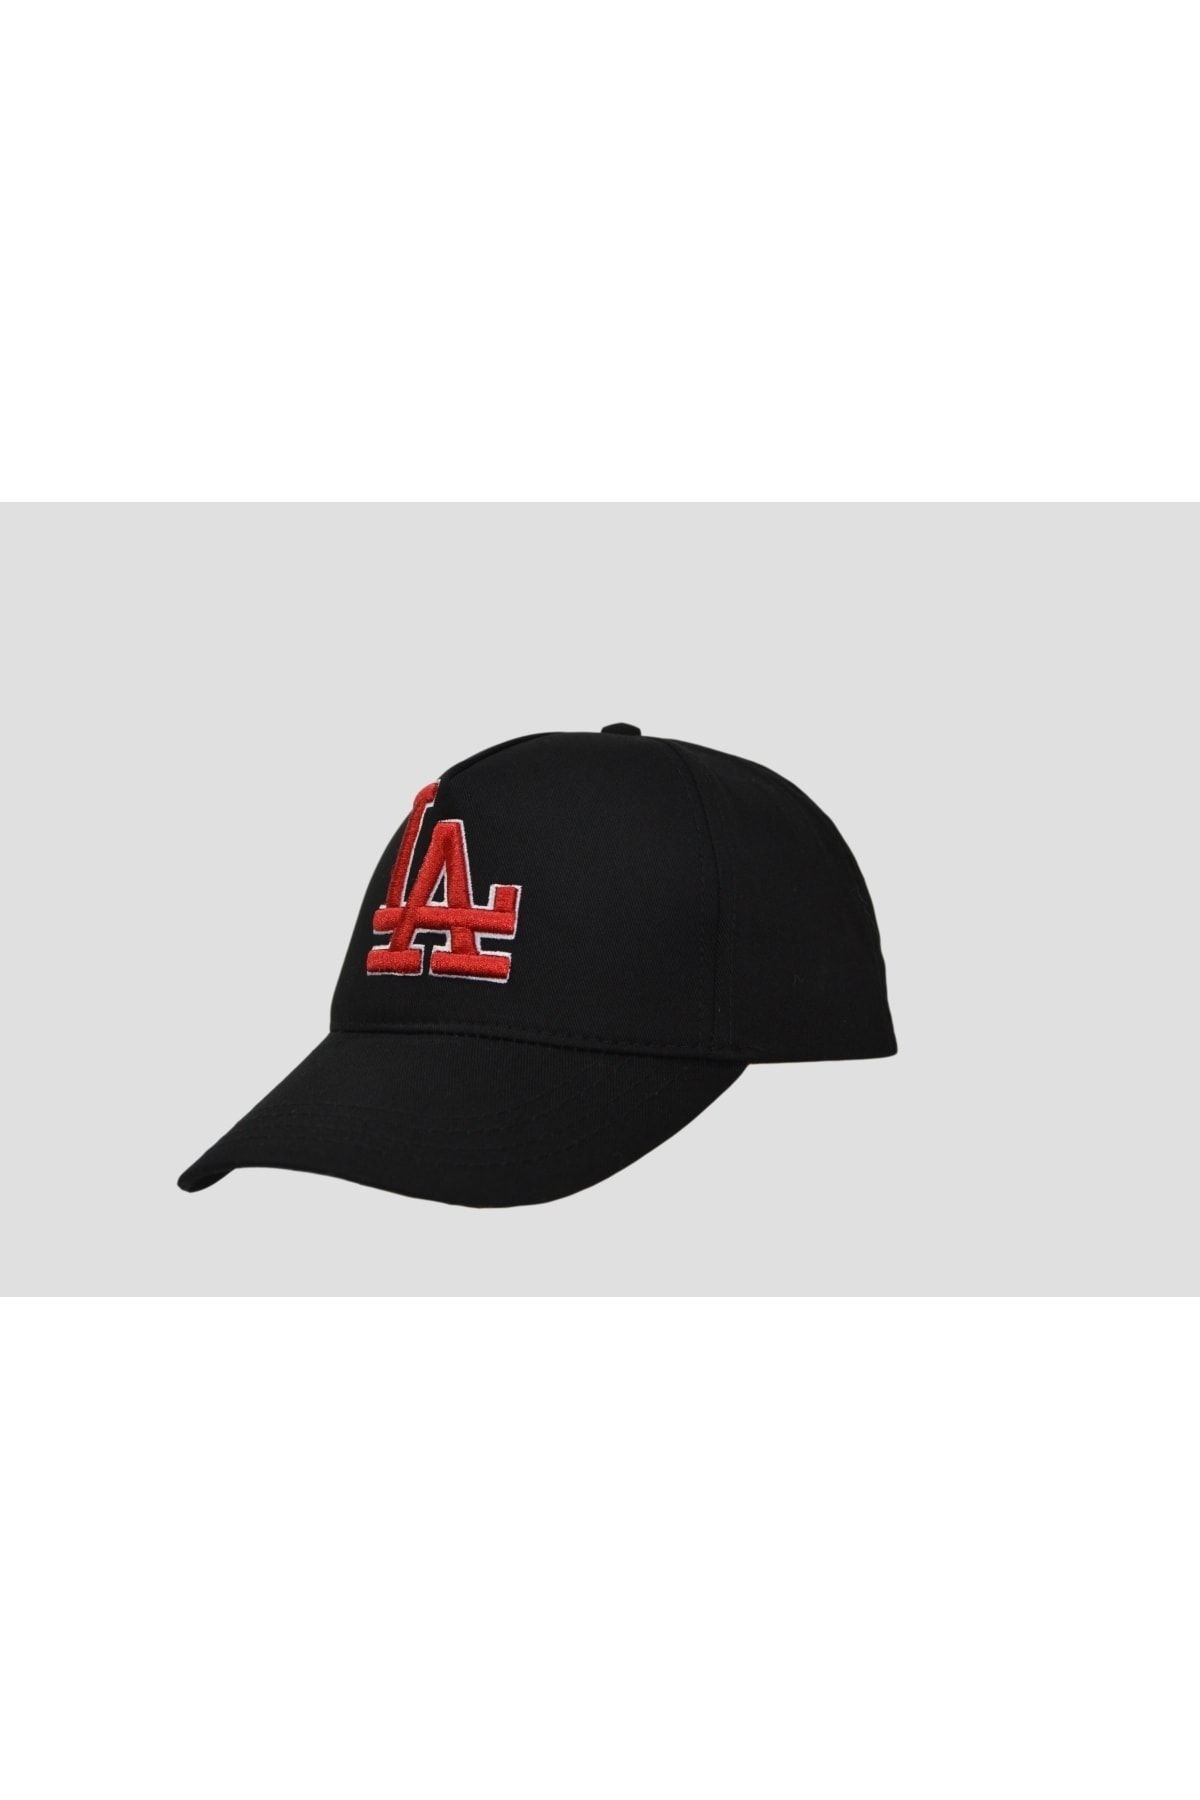 Nacar La Los Angeles Unisex Siyah Şapka Özel Kırmızı Nakış